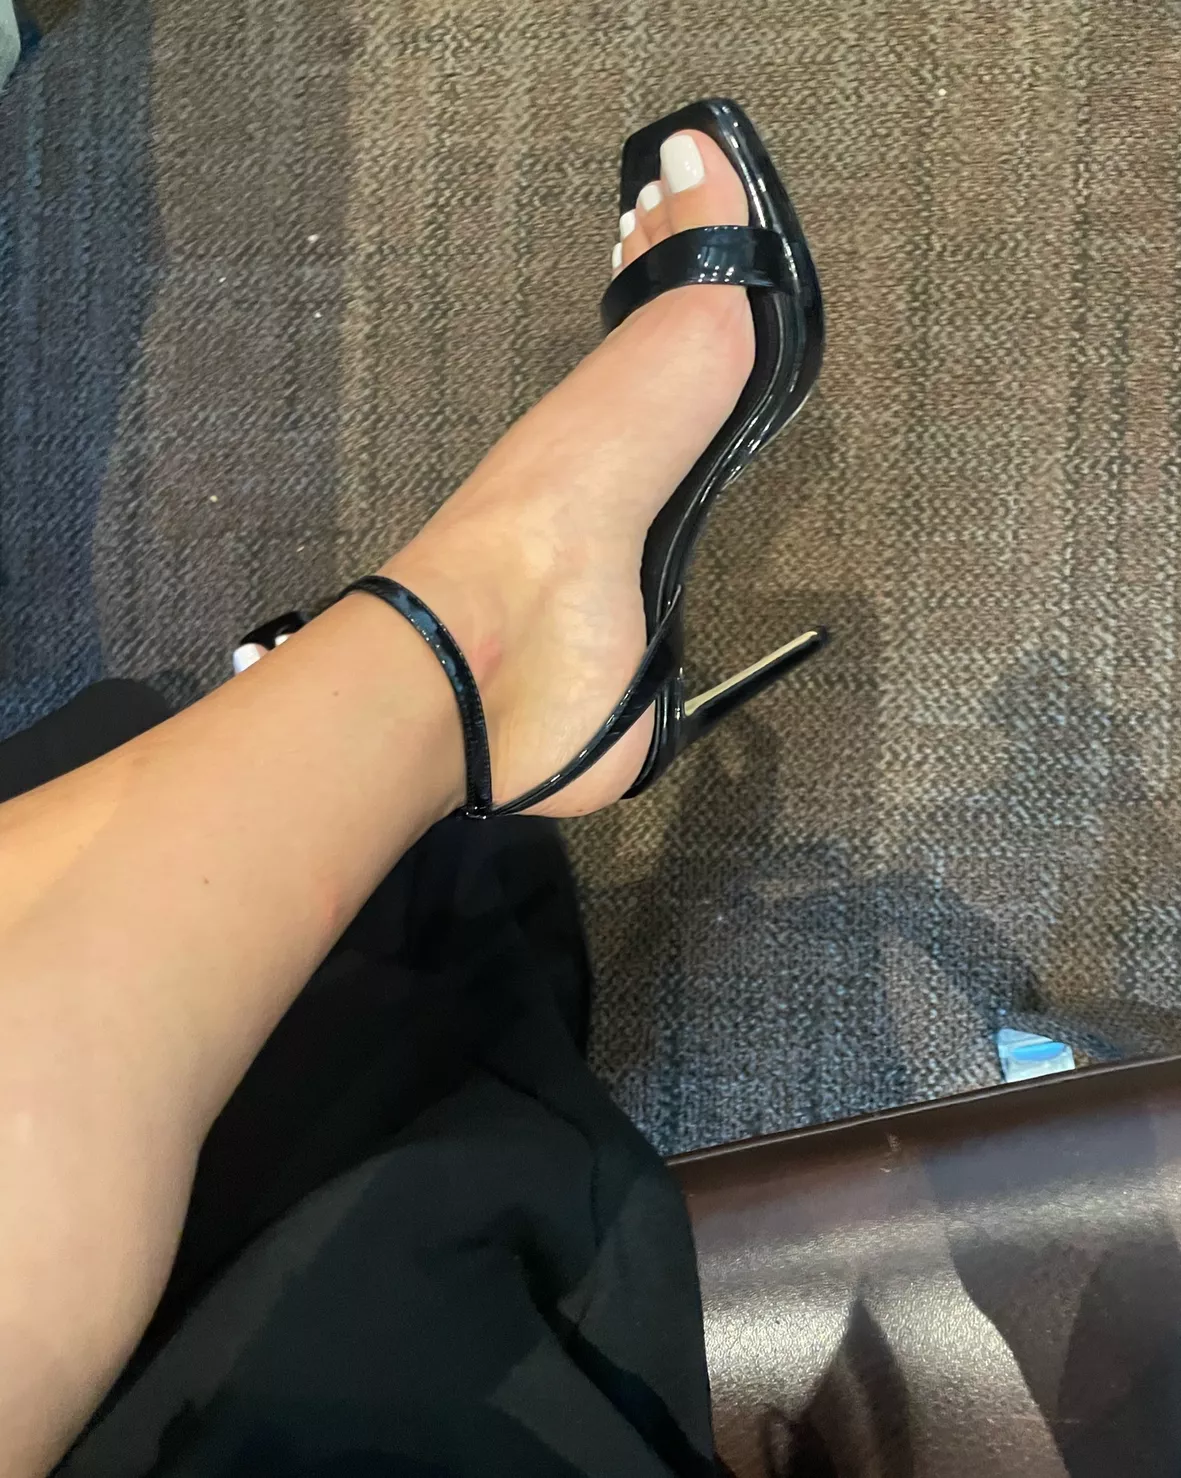 Women's Loola Ankle Strap Dress Sandals